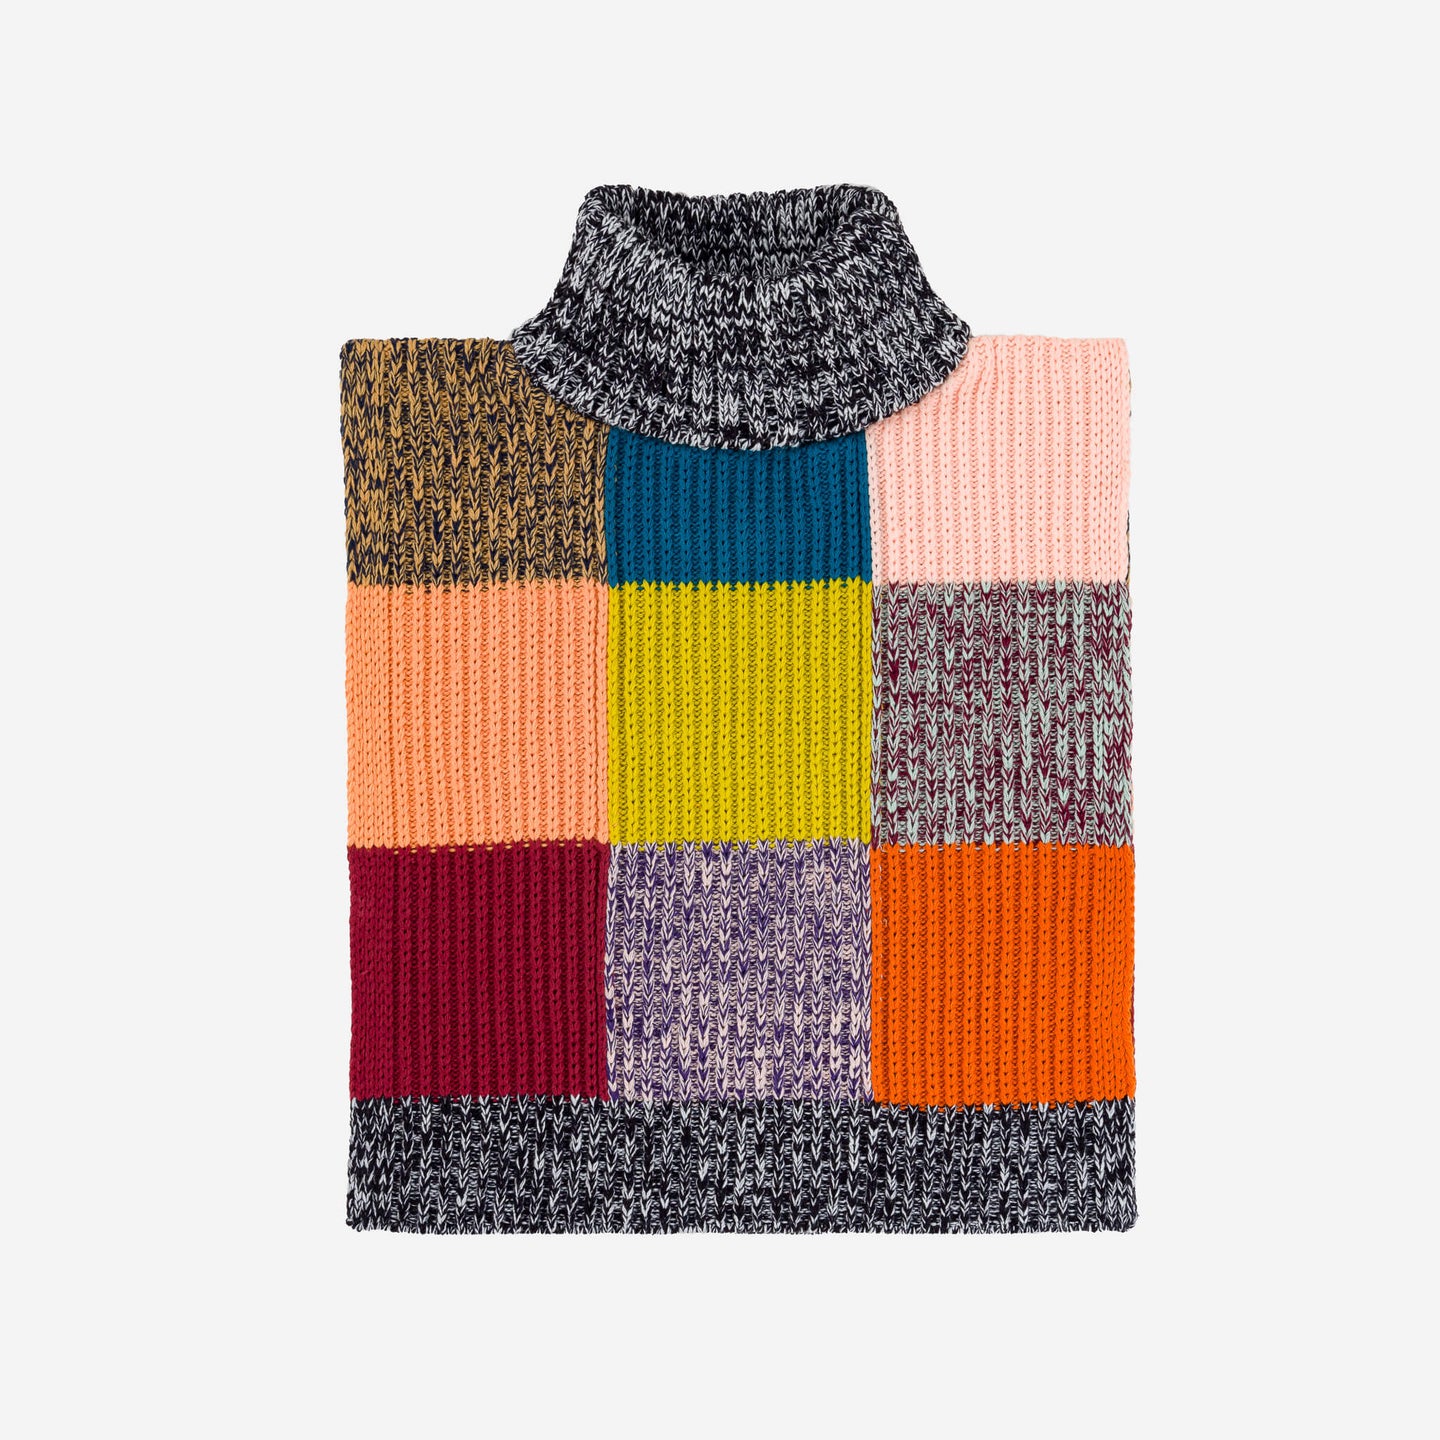 Patchwork Dickie Knit Colorful Vest Sweater Knit Vest Turtleneck